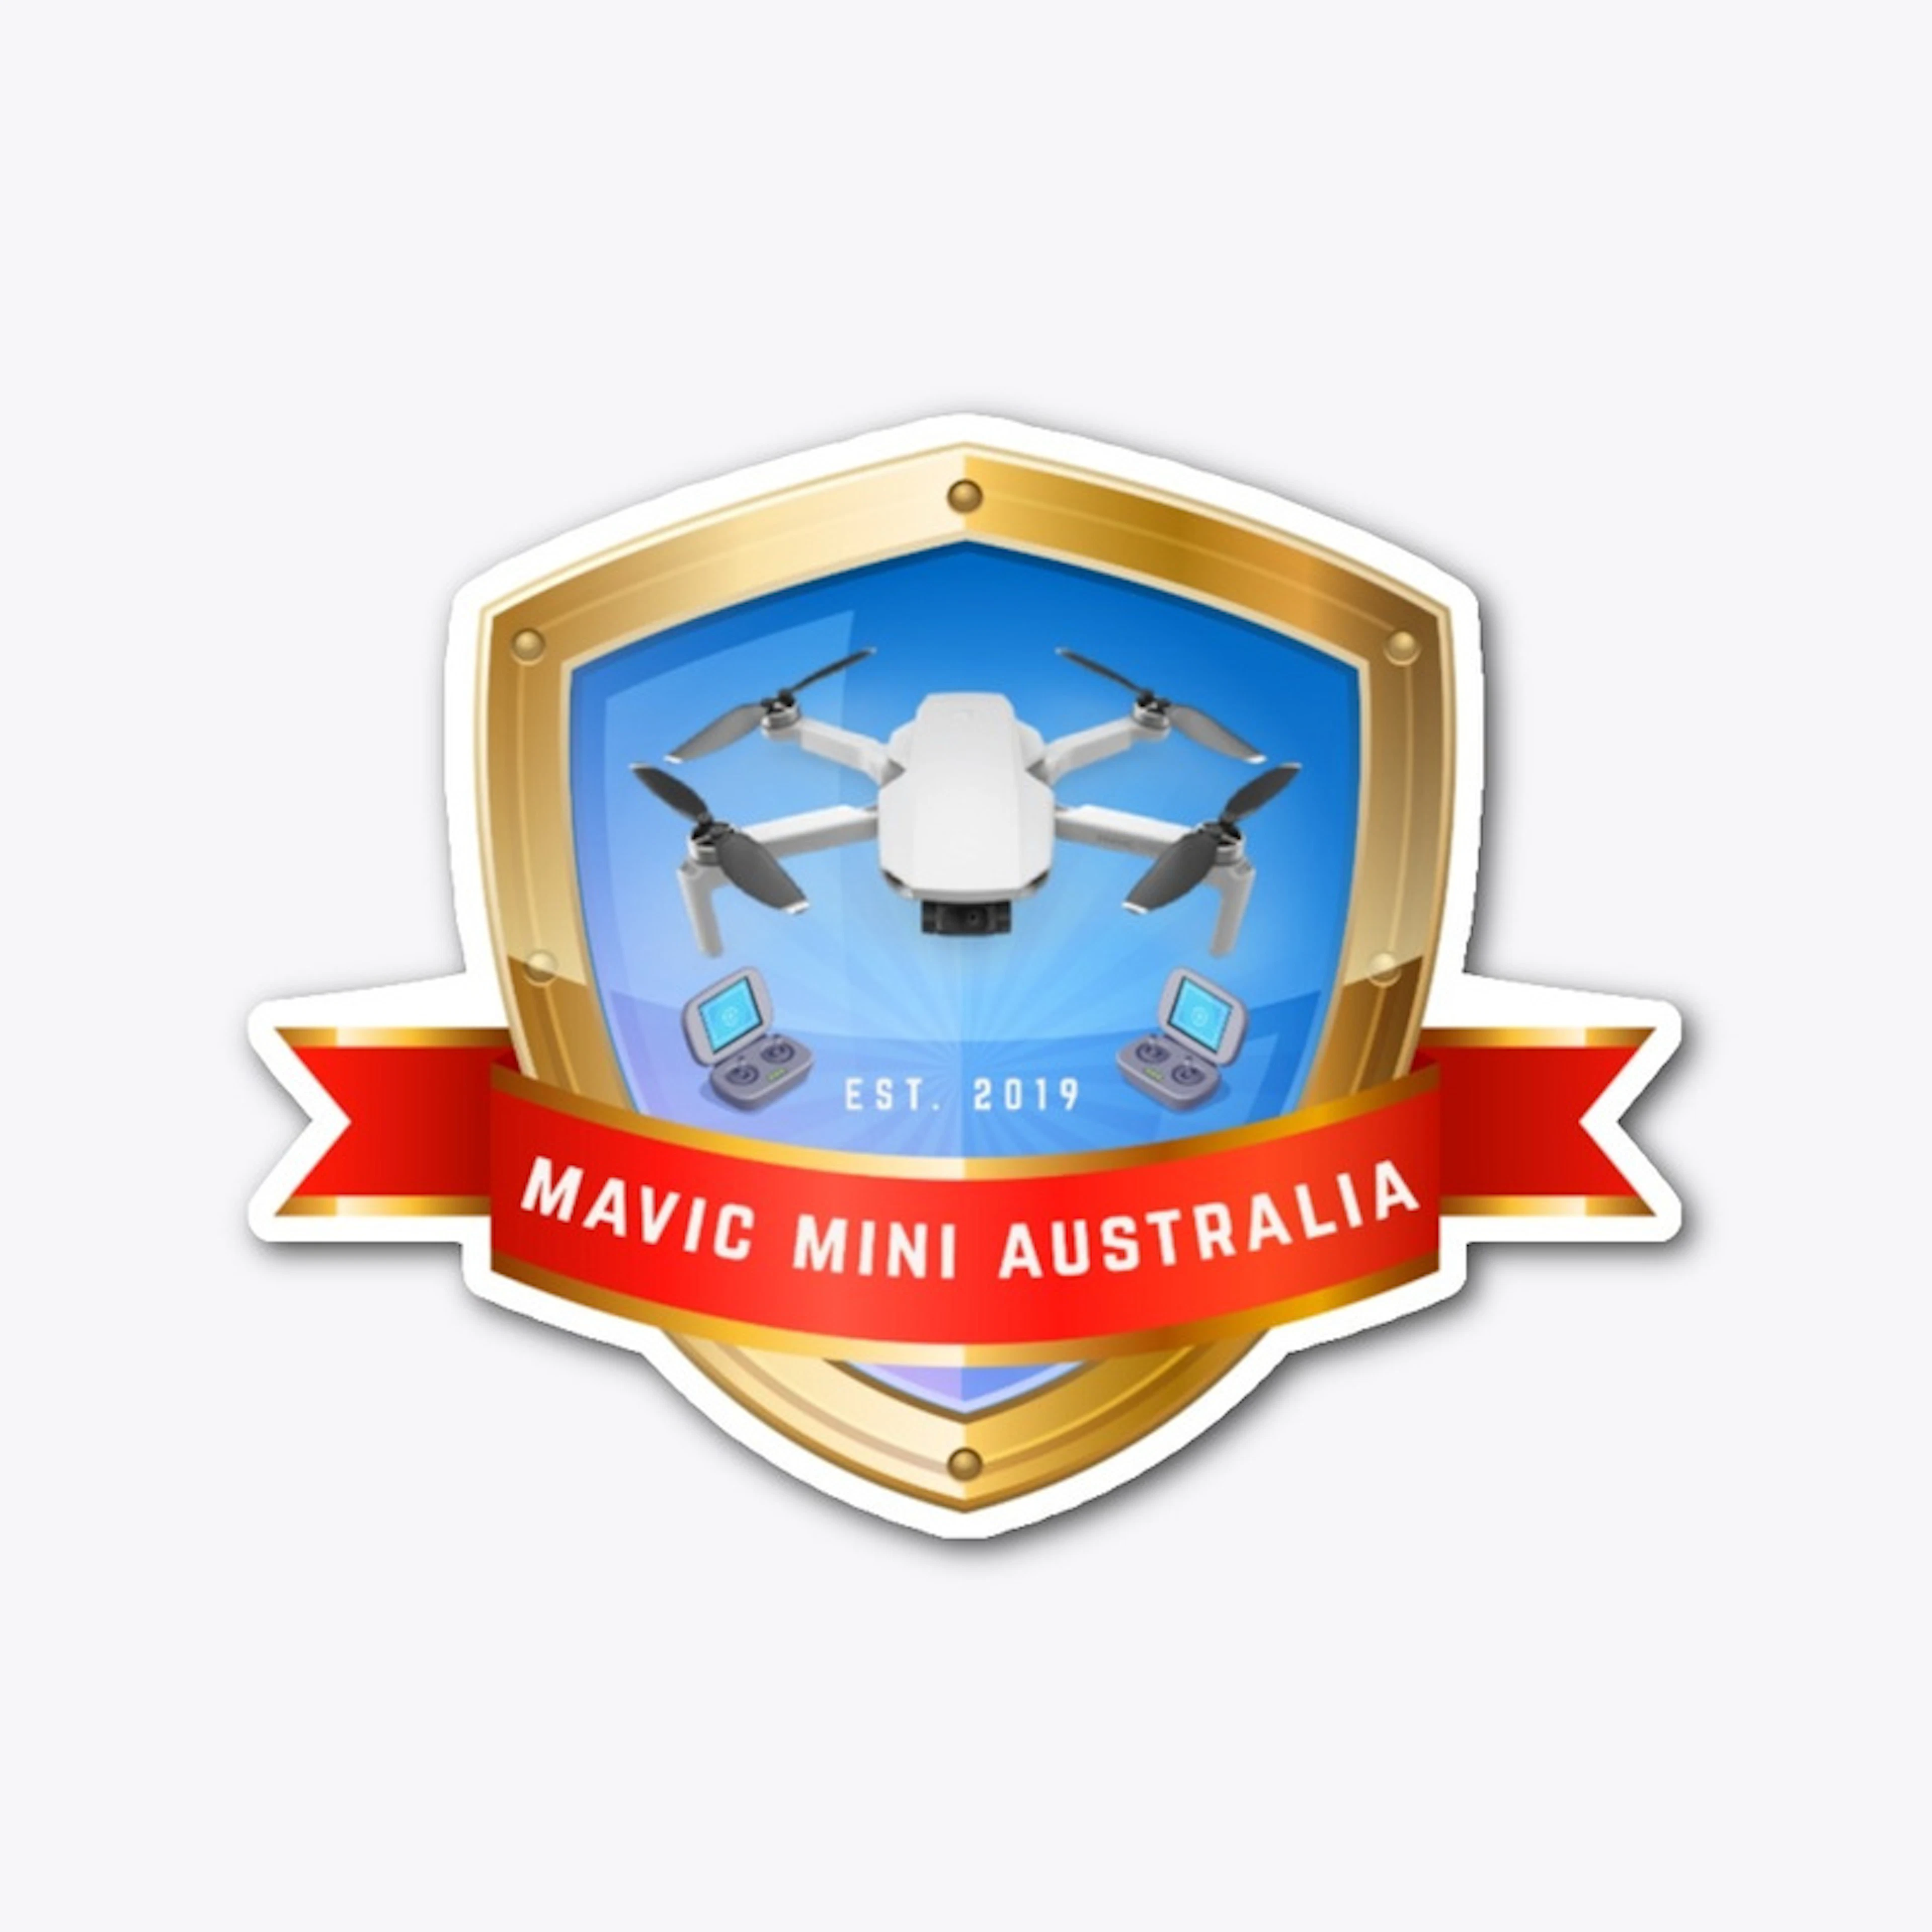 Mavic Mini Australia - Join The Club